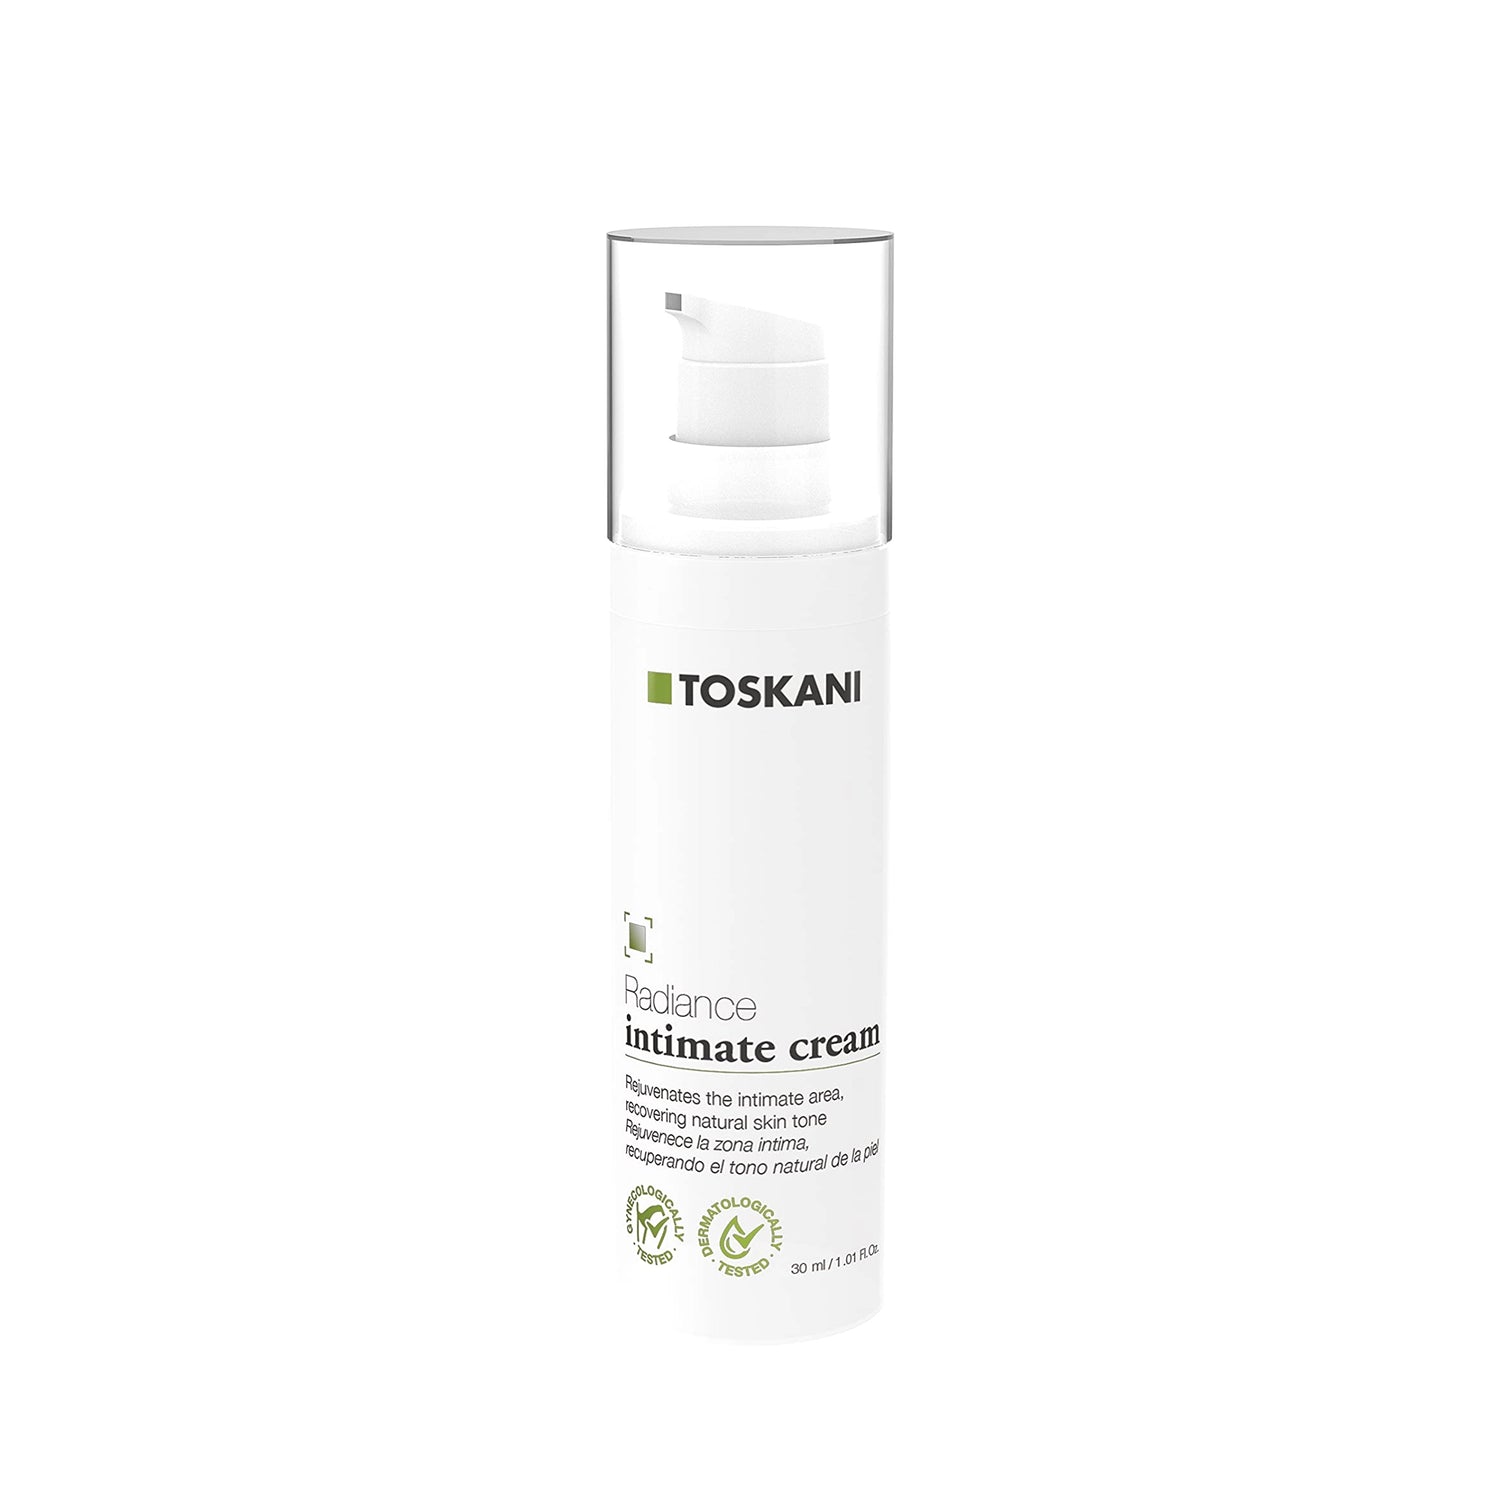 Toskani - Radiance Intimate Cream